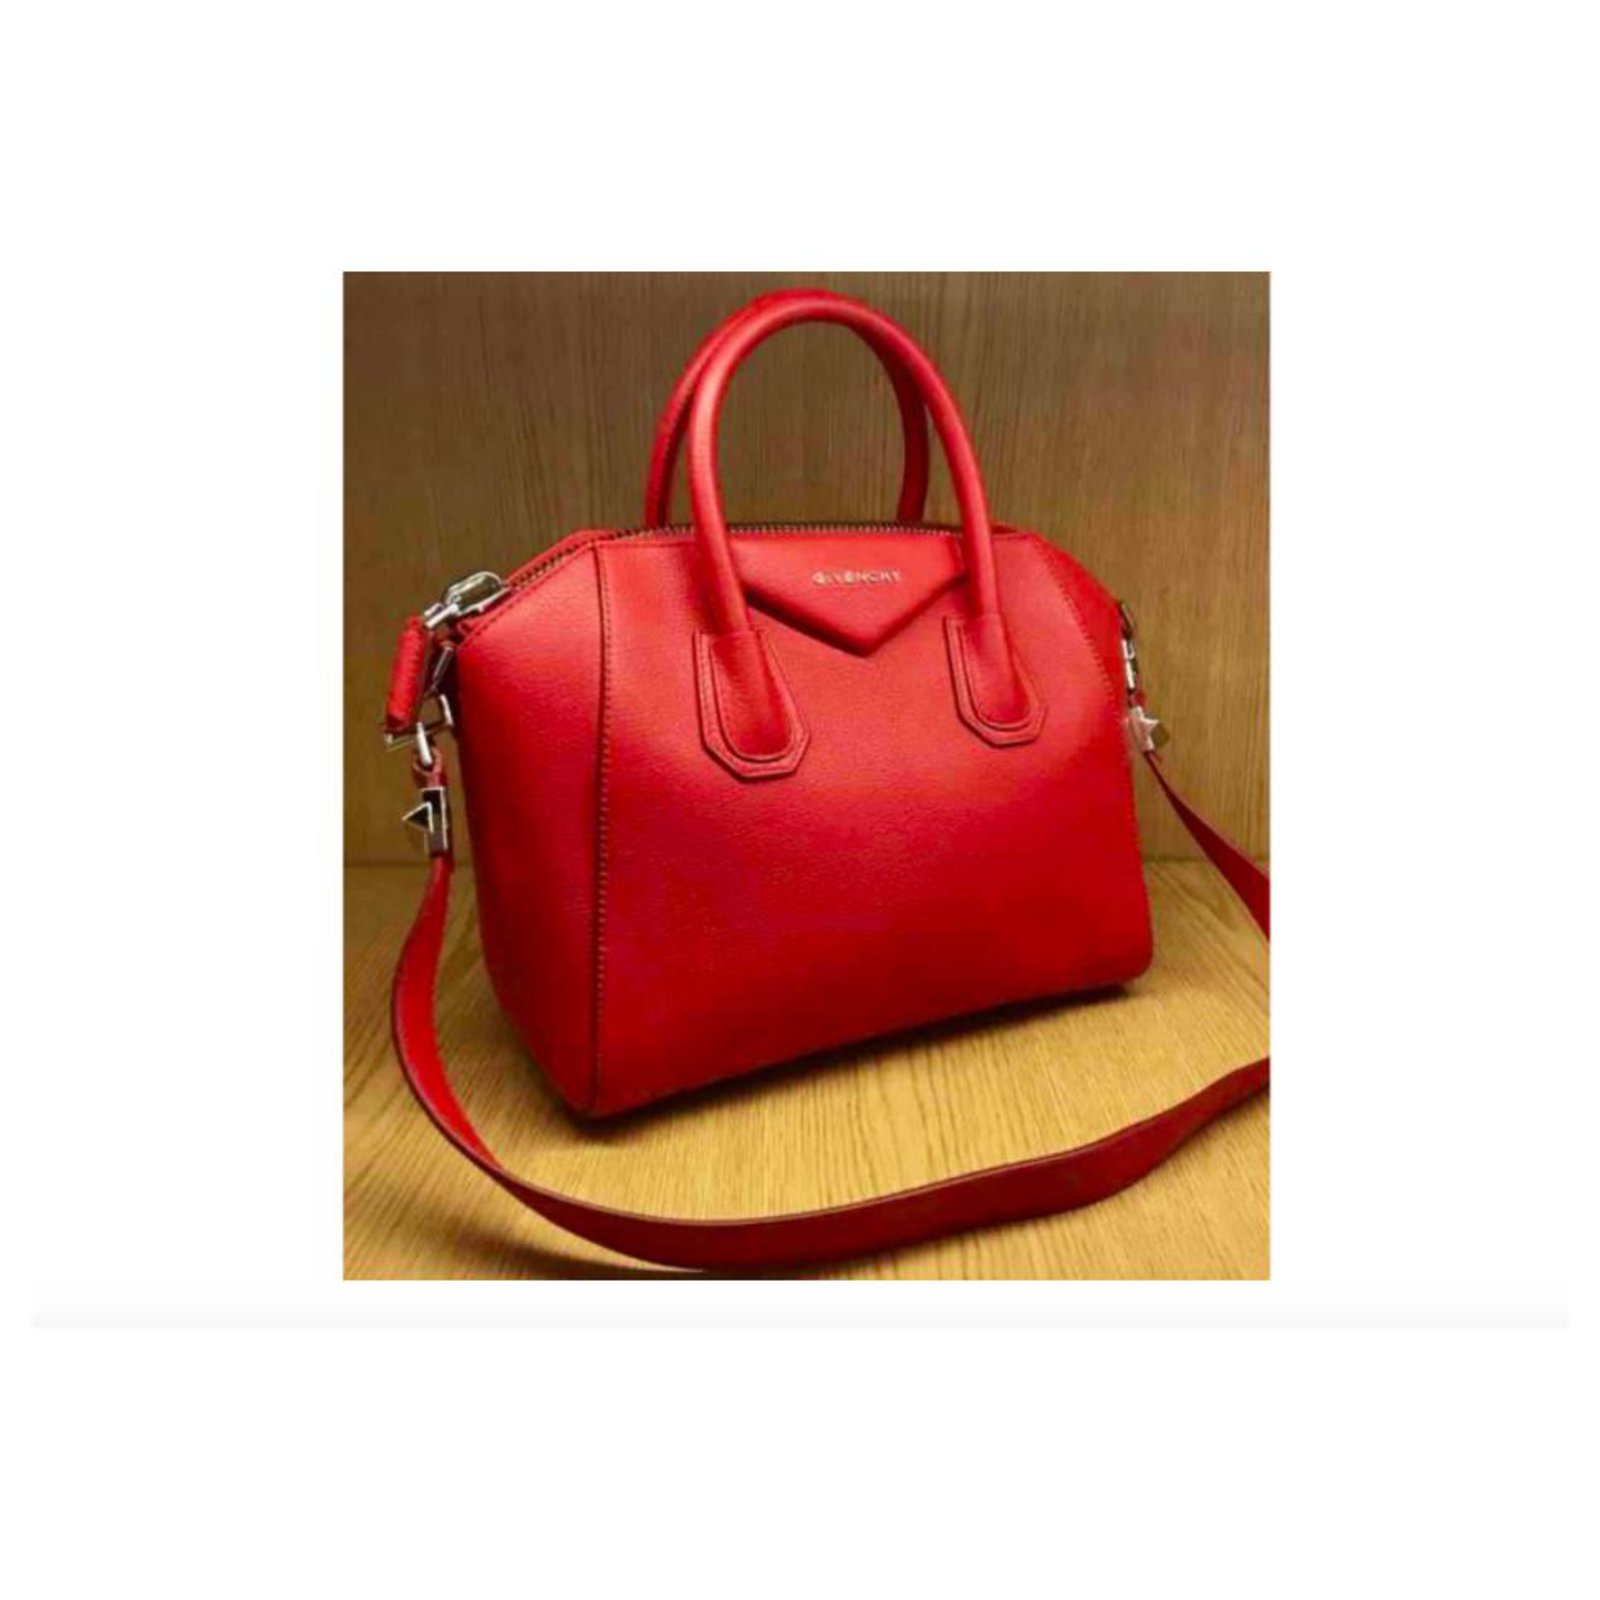 Givenchy Antigona Small Red Bag